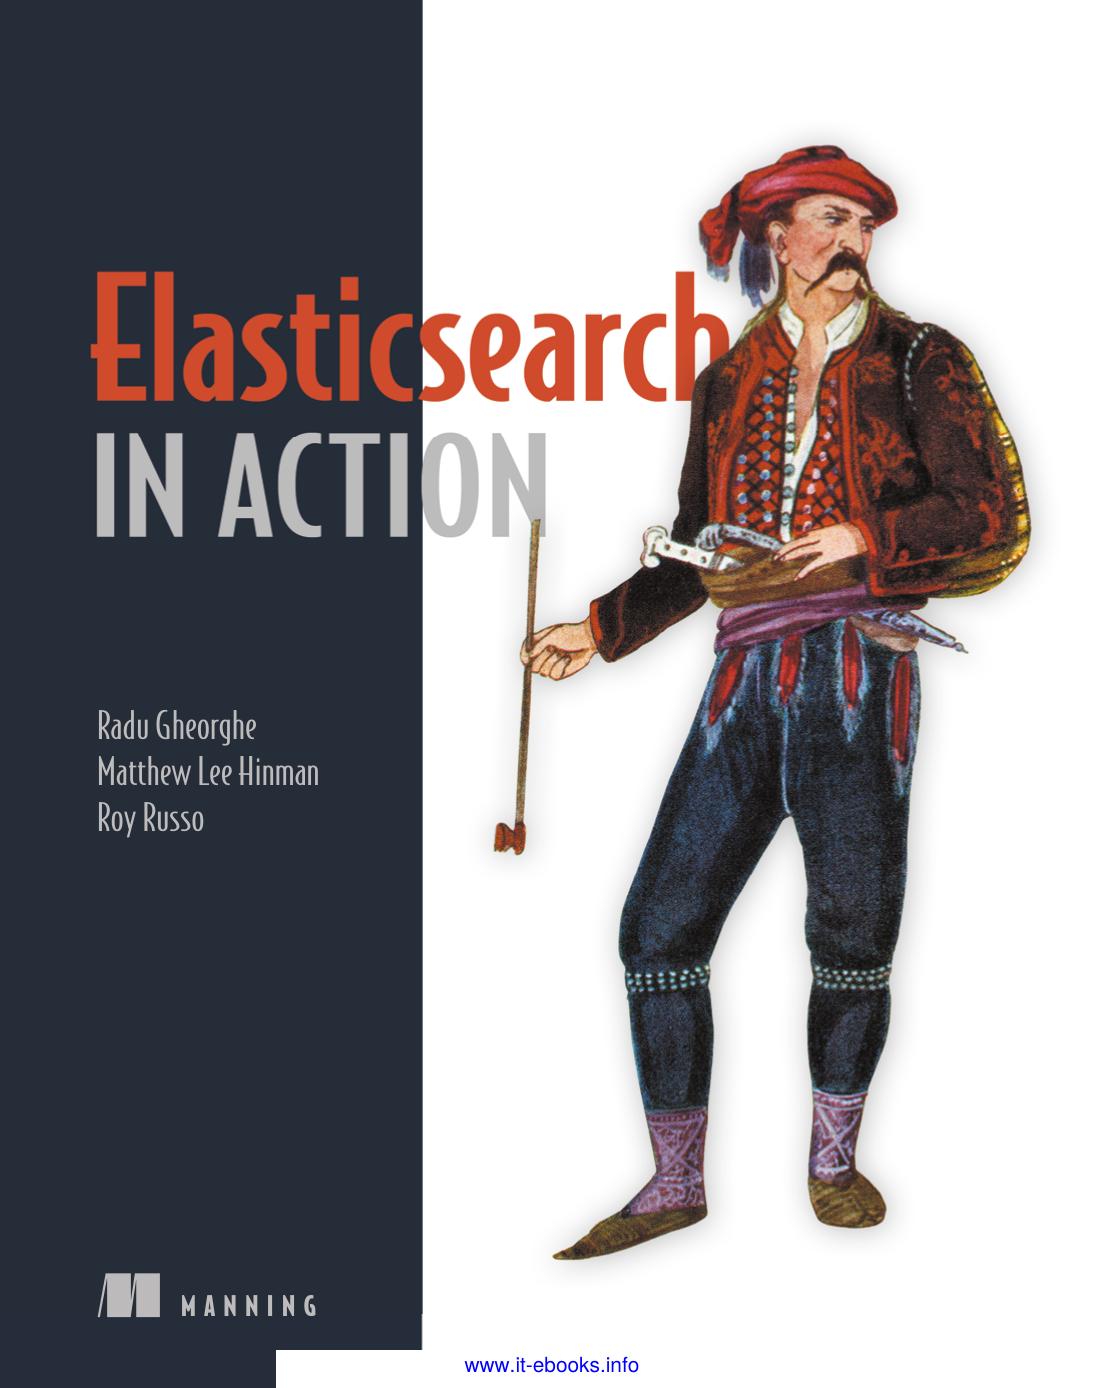 Elasticsearch in Action by Radu Gheorghe Matthew Lee Hinman & Roy Russo